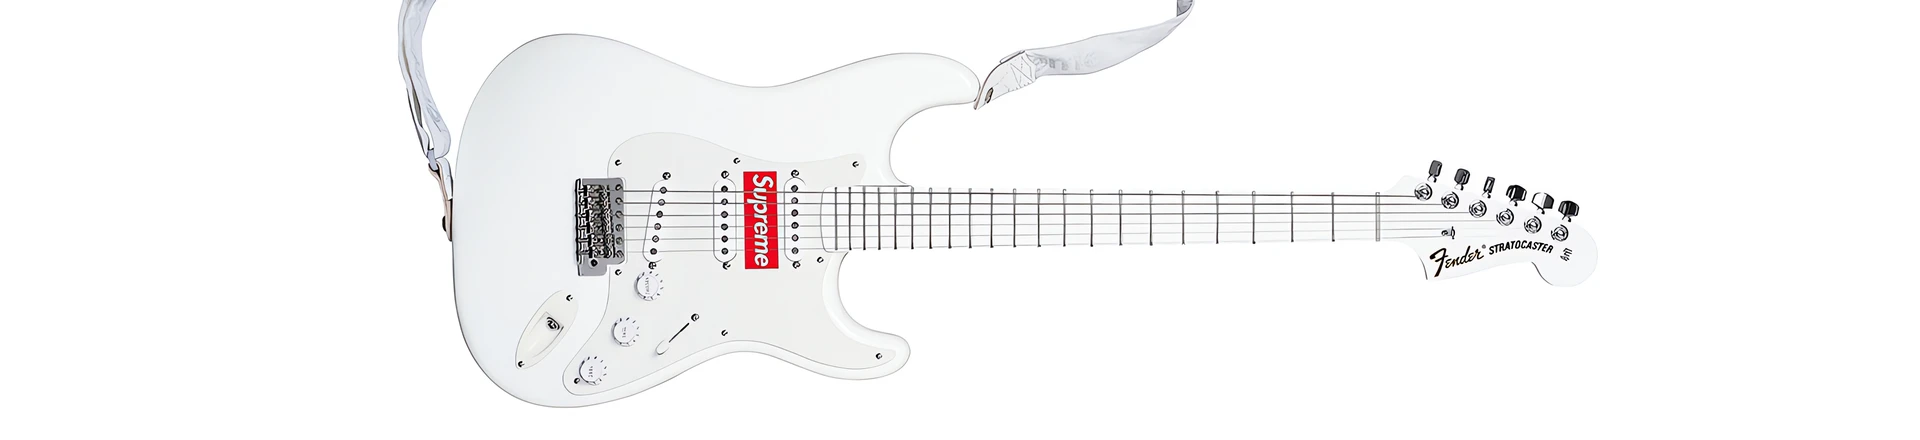 Fender Supreme Stratocaster - mariaż muzyki i mody 